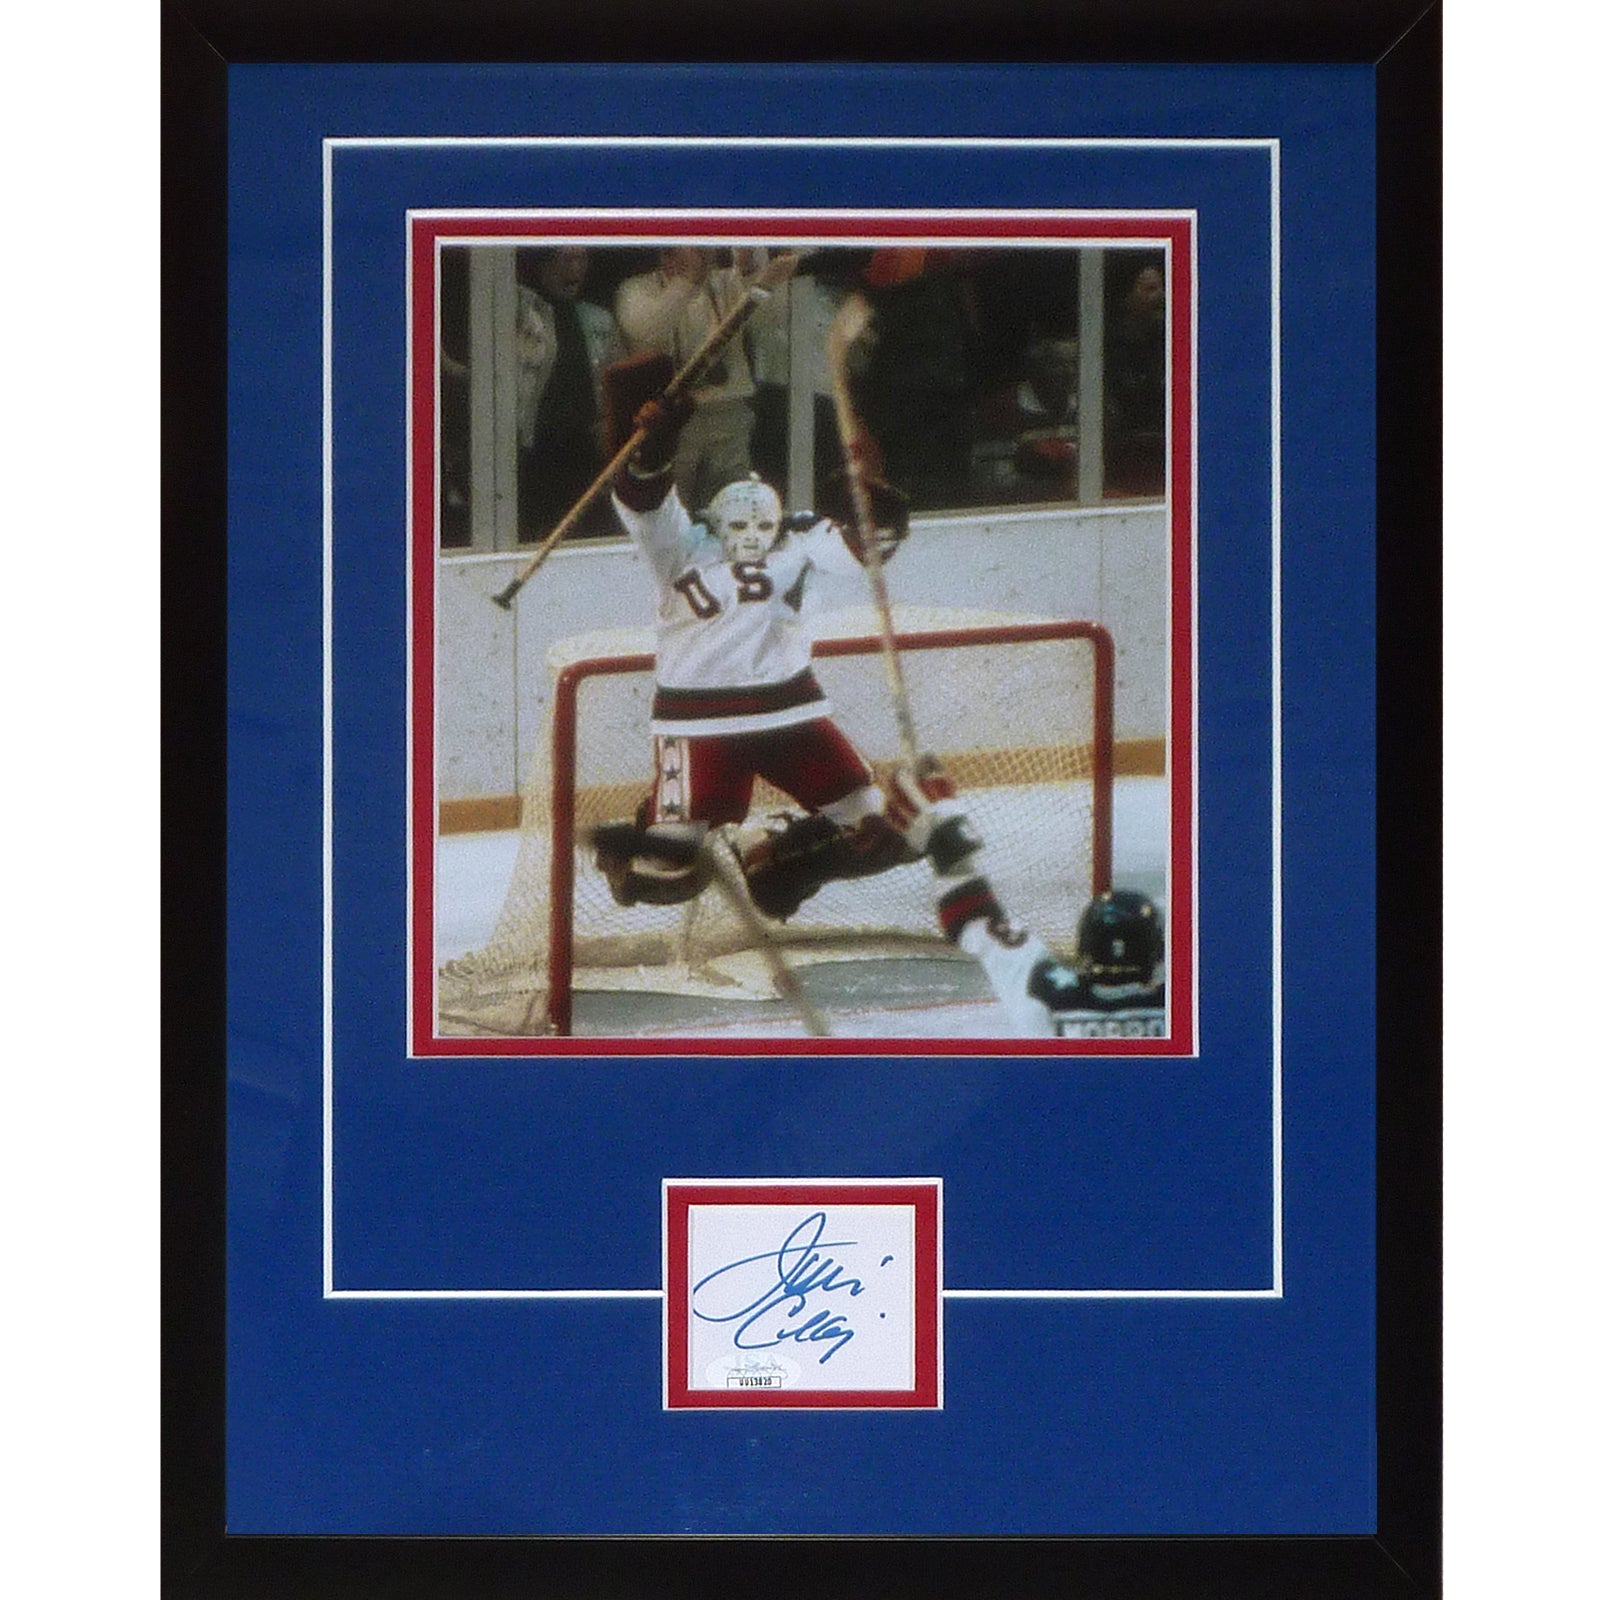 Jim Craig Autographed 1980 USA Olympic Hockey 11x14 Photo Signature Series Frame - JSA